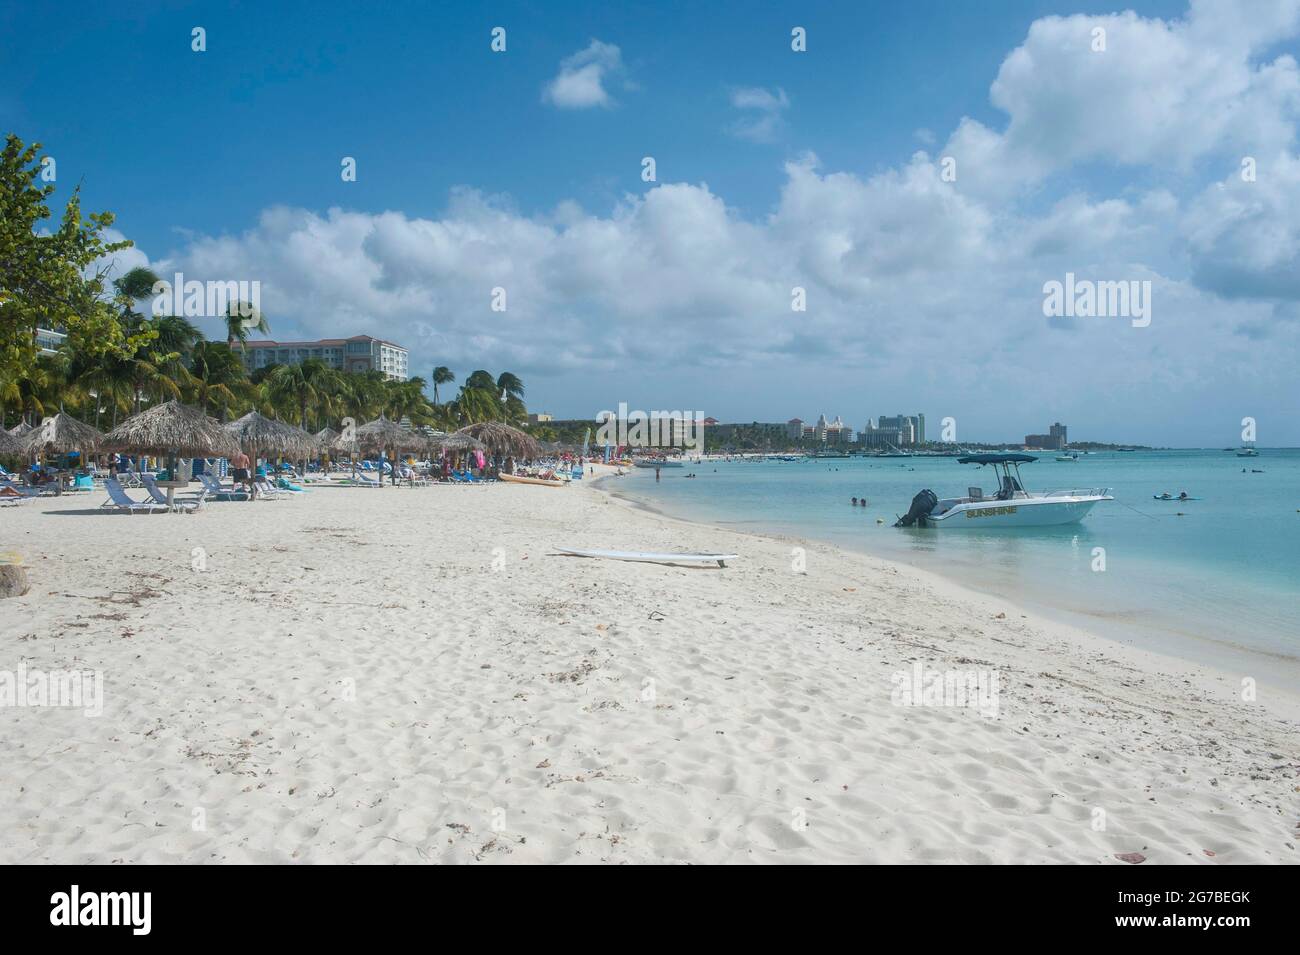 Acque turchesi e sabbia bianca spiaggia di Arashi, Aruba, Isole ABC, antille Olandesi, Caraibi Foto Stock